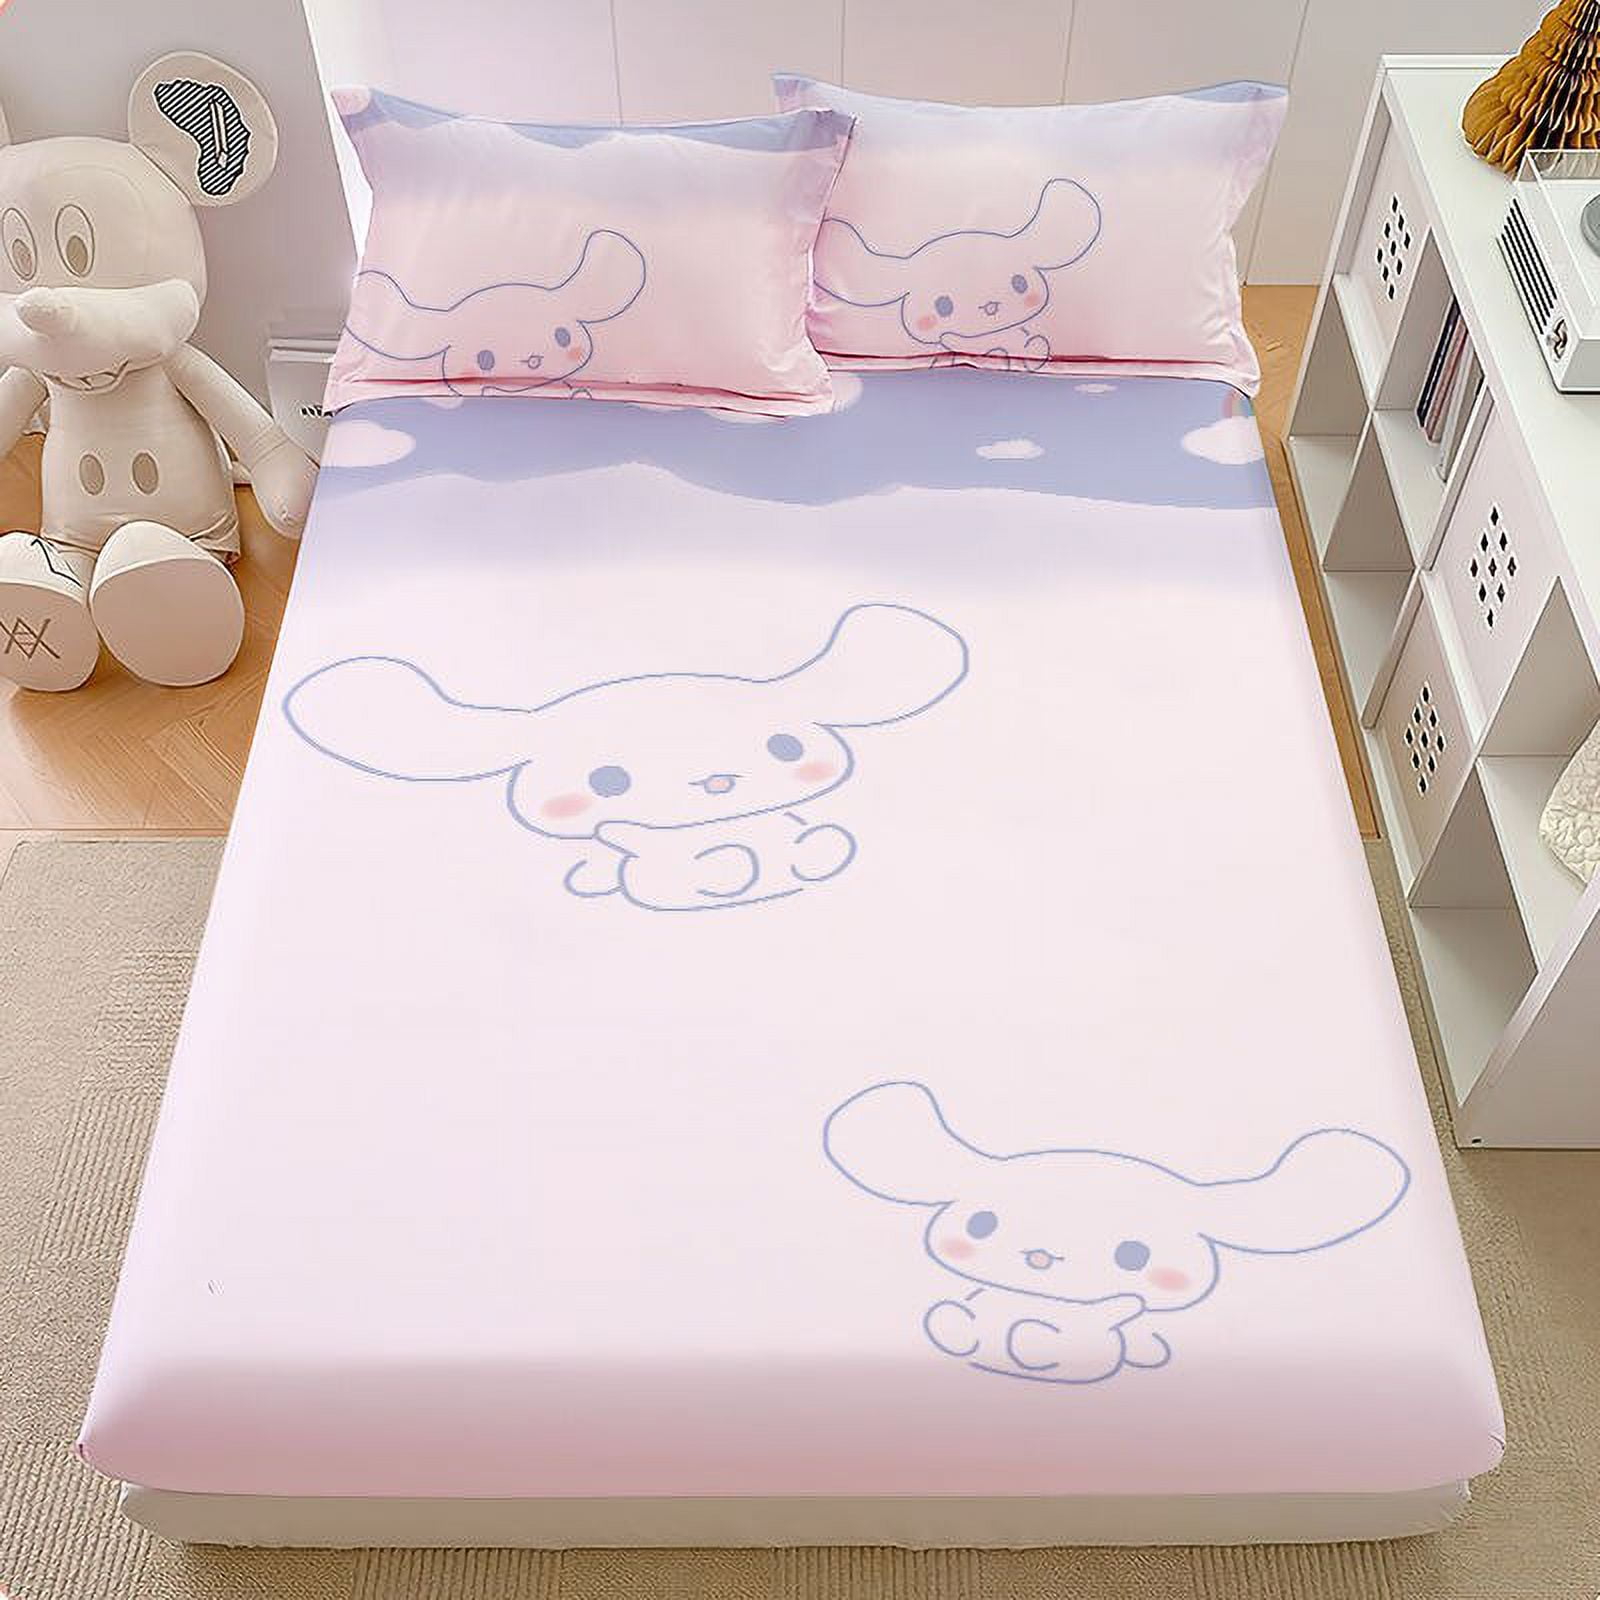 Cute Cartoon Sanrio Cinnamoroll Fitted Sheet Kawaii Anime Home Bedding Soft Cotton  Comfort Girl Heart Sheets Birthday Gifts 